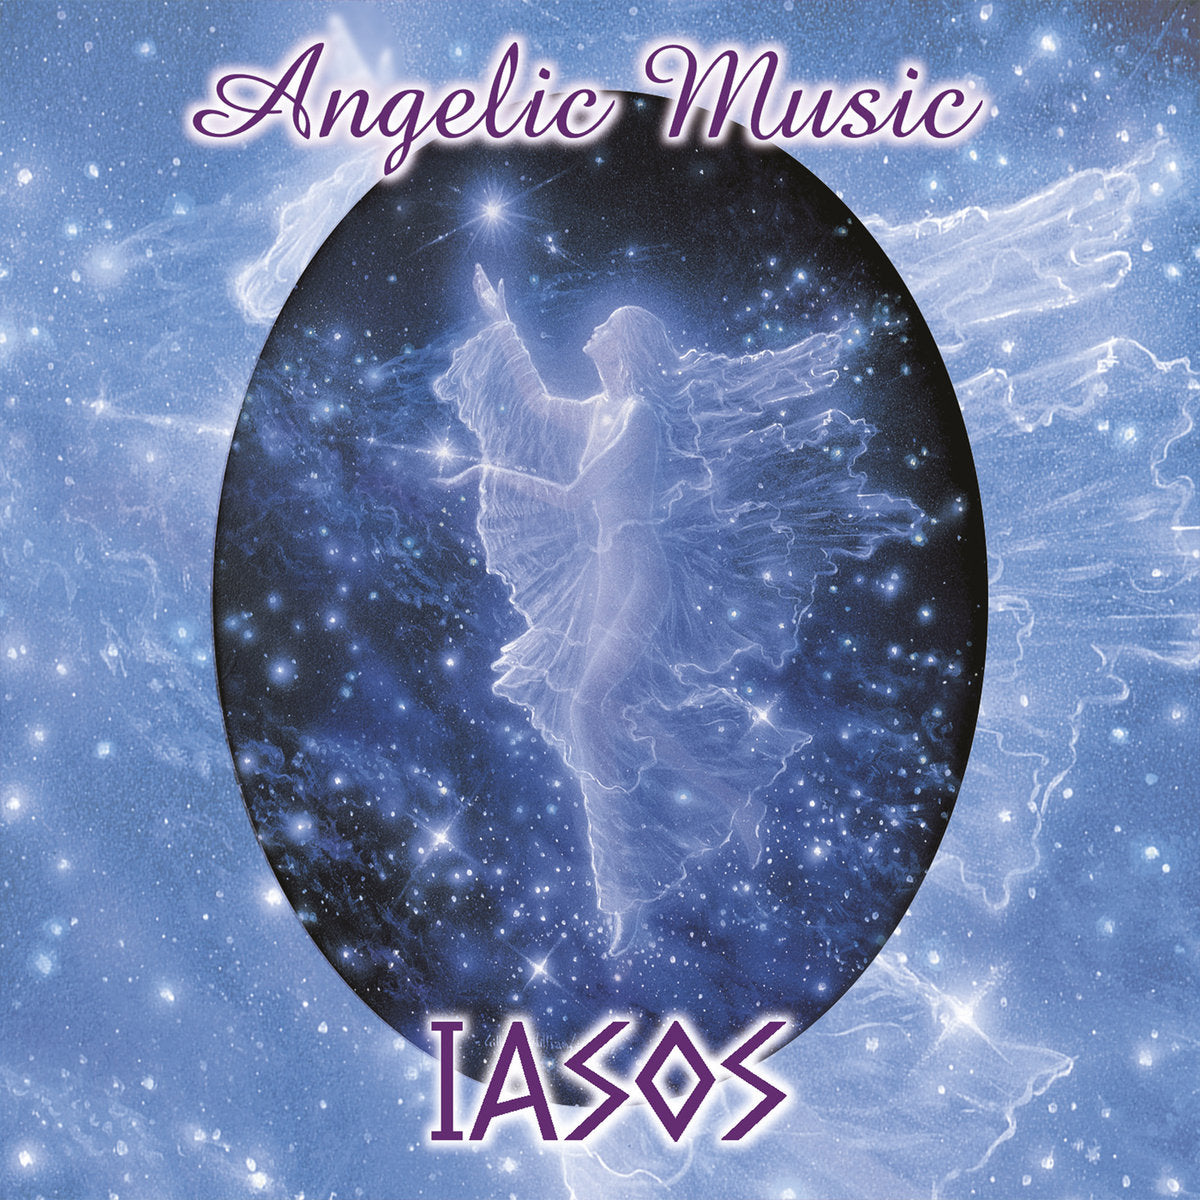 [SOLD OUT] IASOS "Angelic Music" CD (digipak)